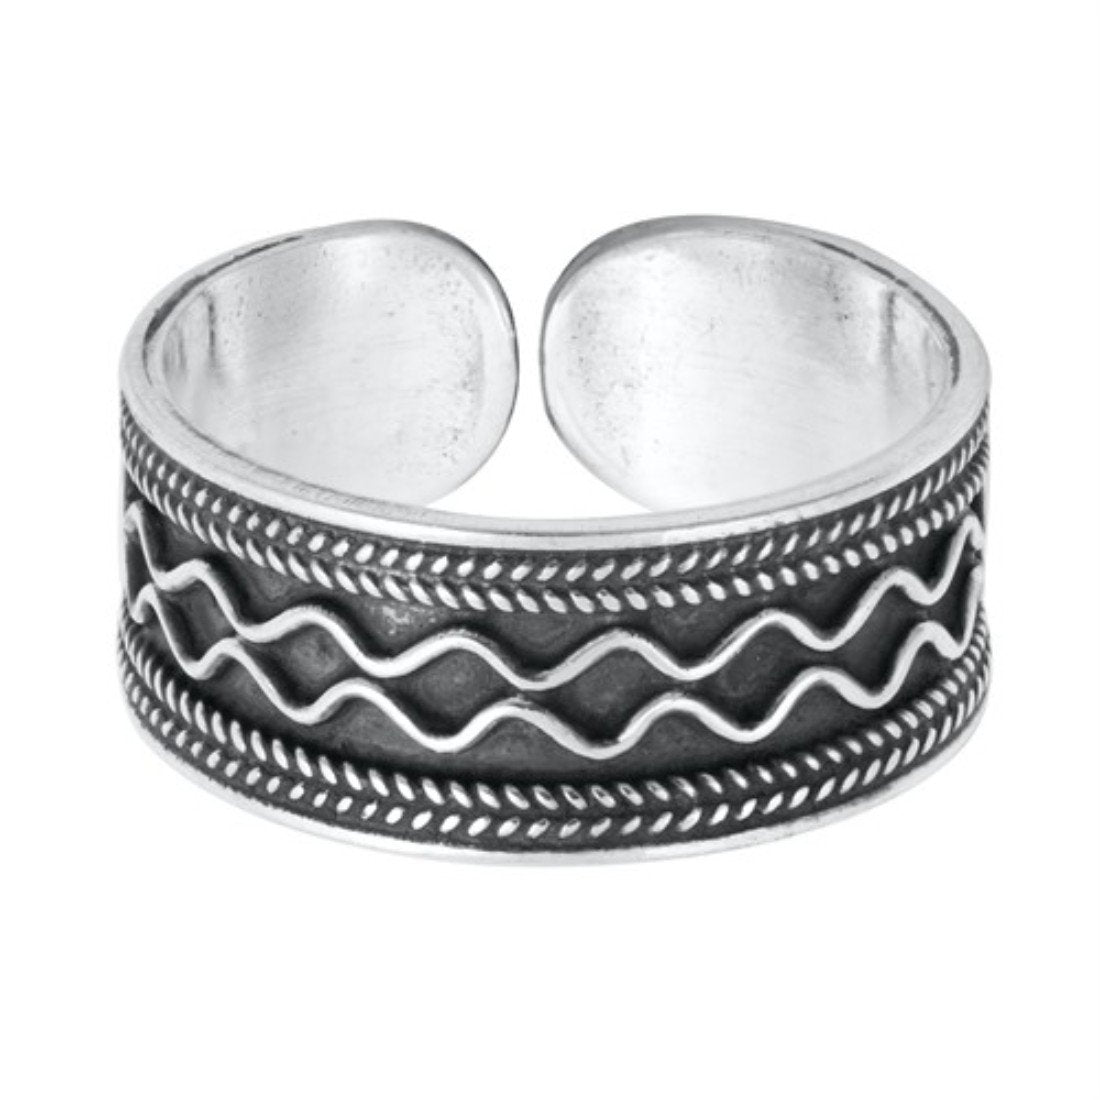 Bali Design Silver Toe Ring Adjustable Band 925 Sterling Silver (6mm)